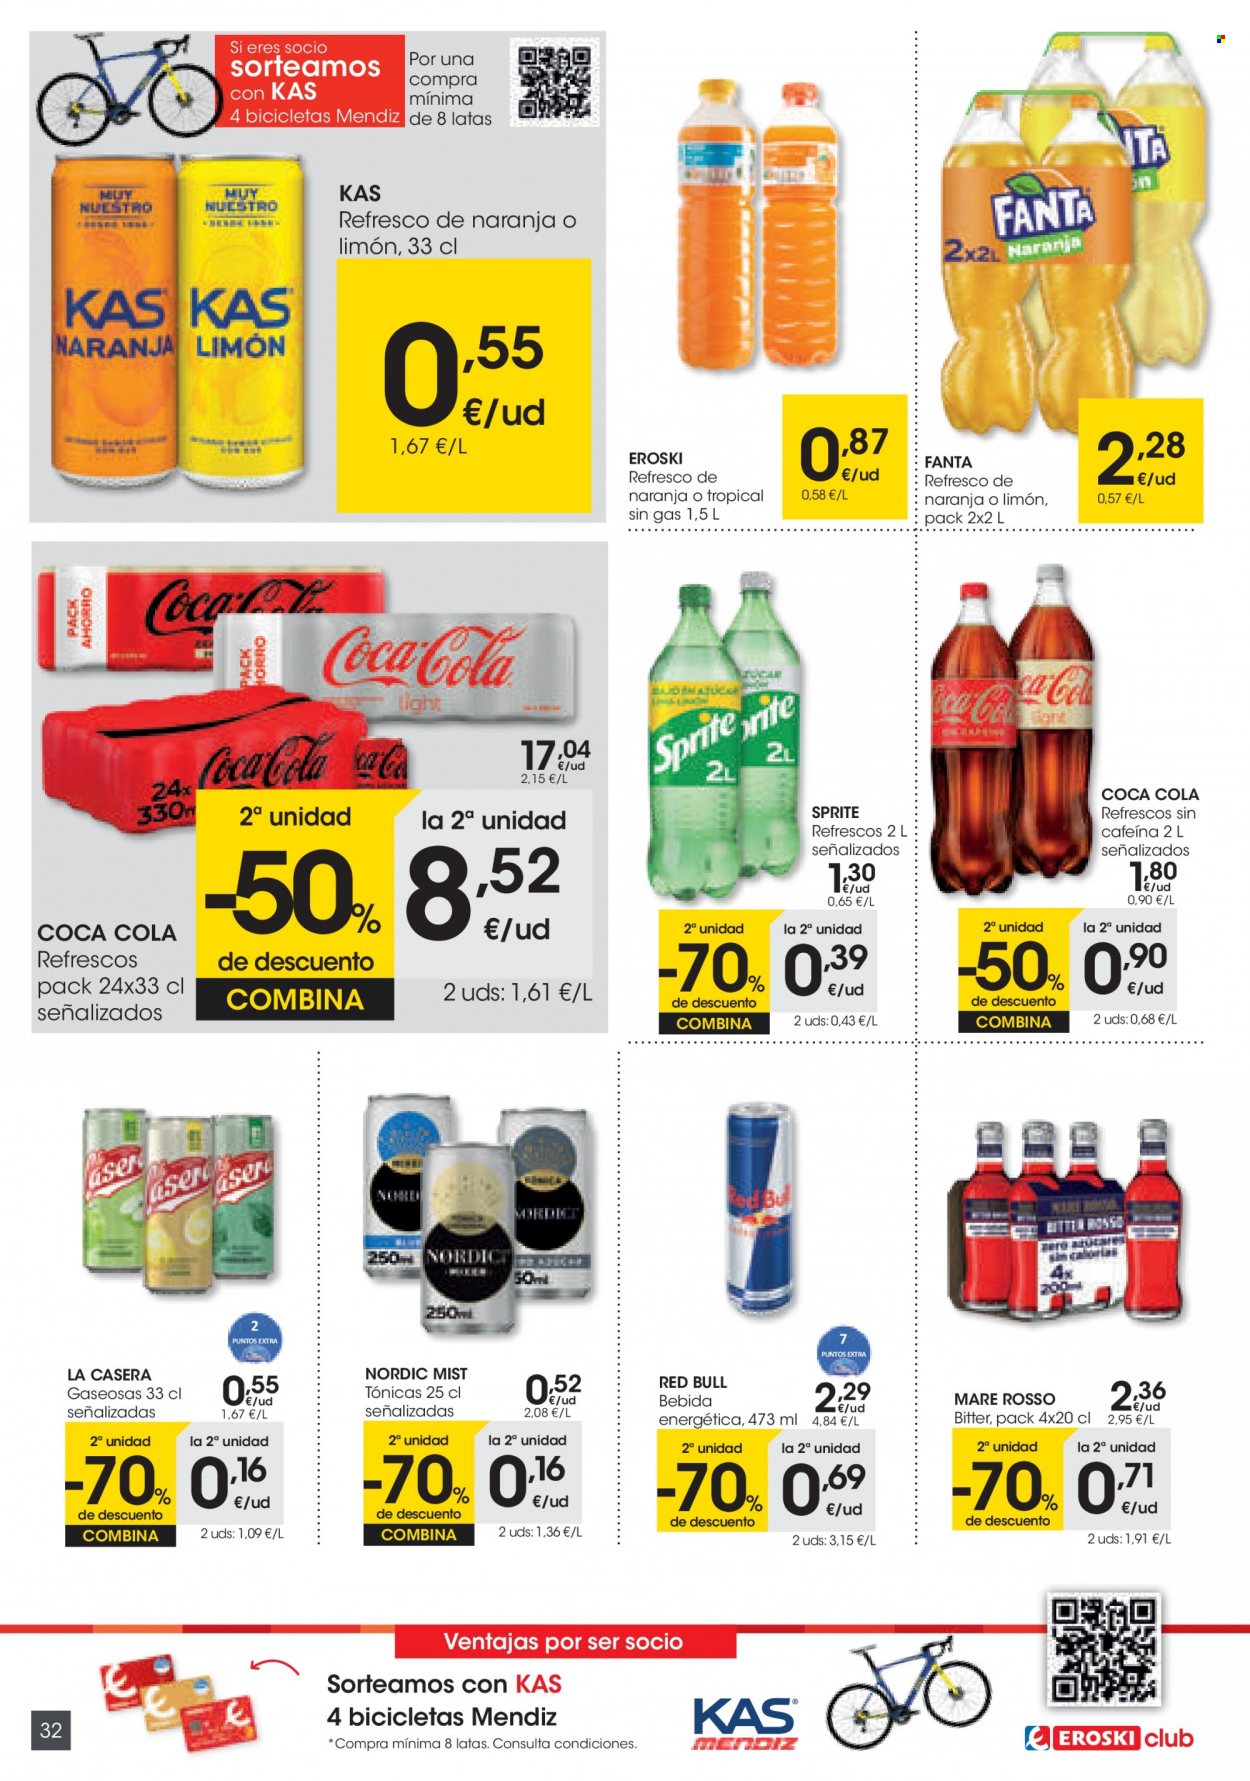 thumbnail - Folleto actual Eroski - 07/10/21 - 20/10/21 - Ventas - bebida, Coca-cola, Fanta, Red Bull, Sprite, bicicleta. Página 32.